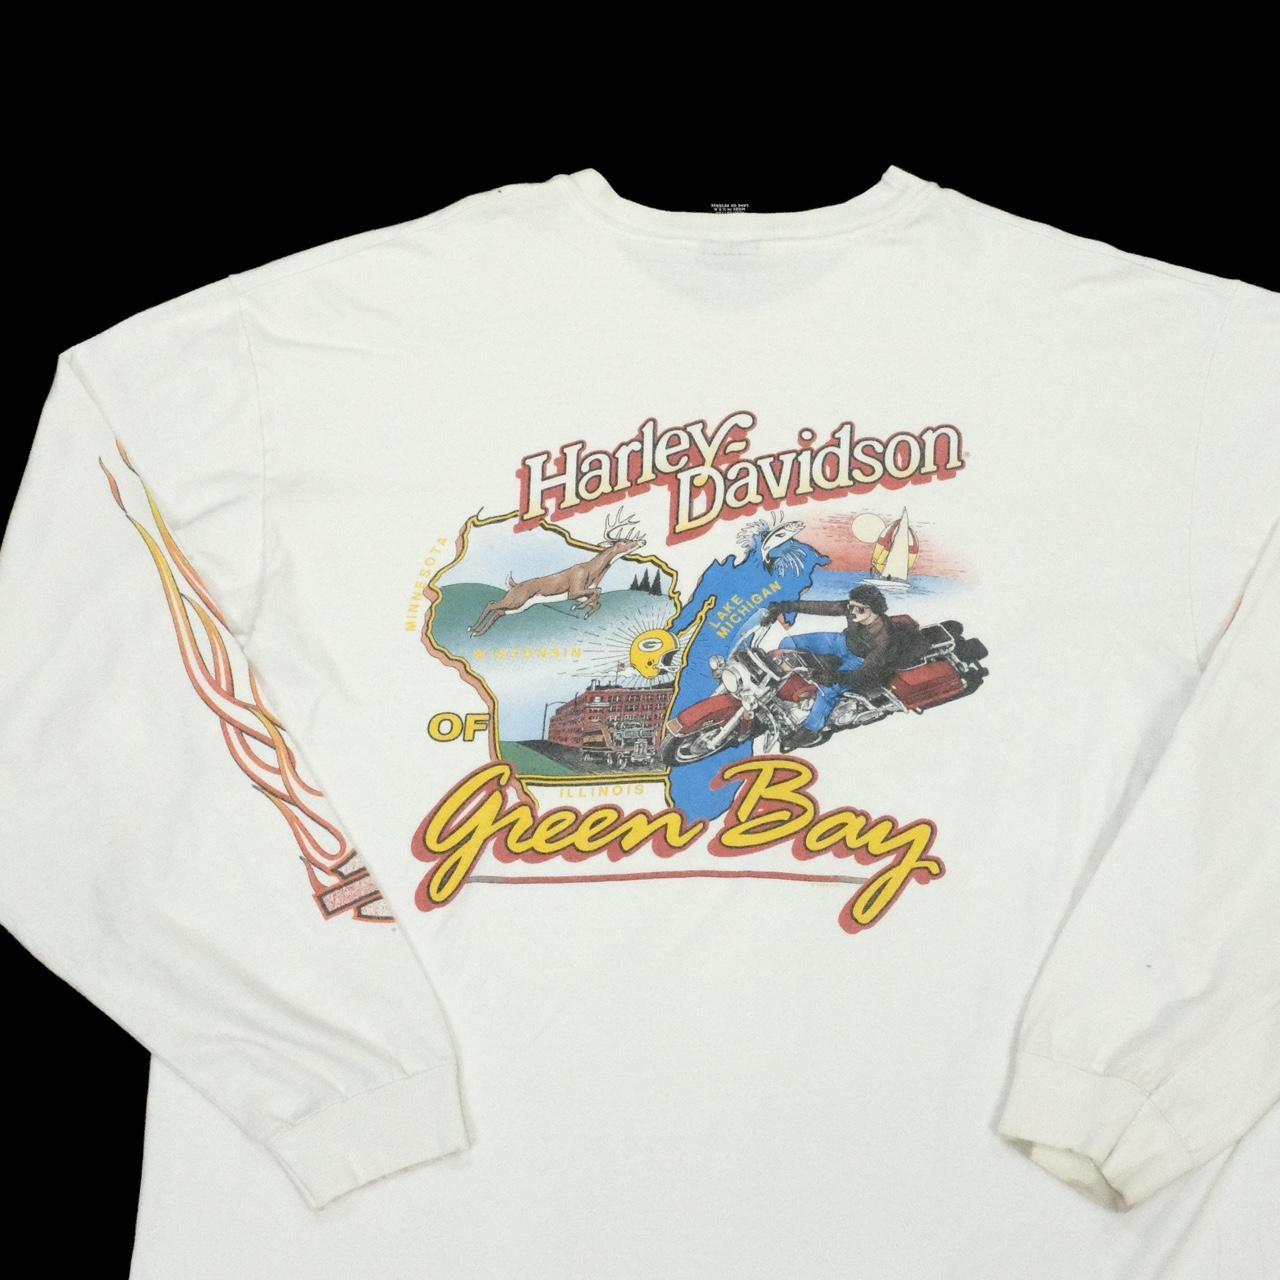 Vintage 1996 Harley Davidson print top